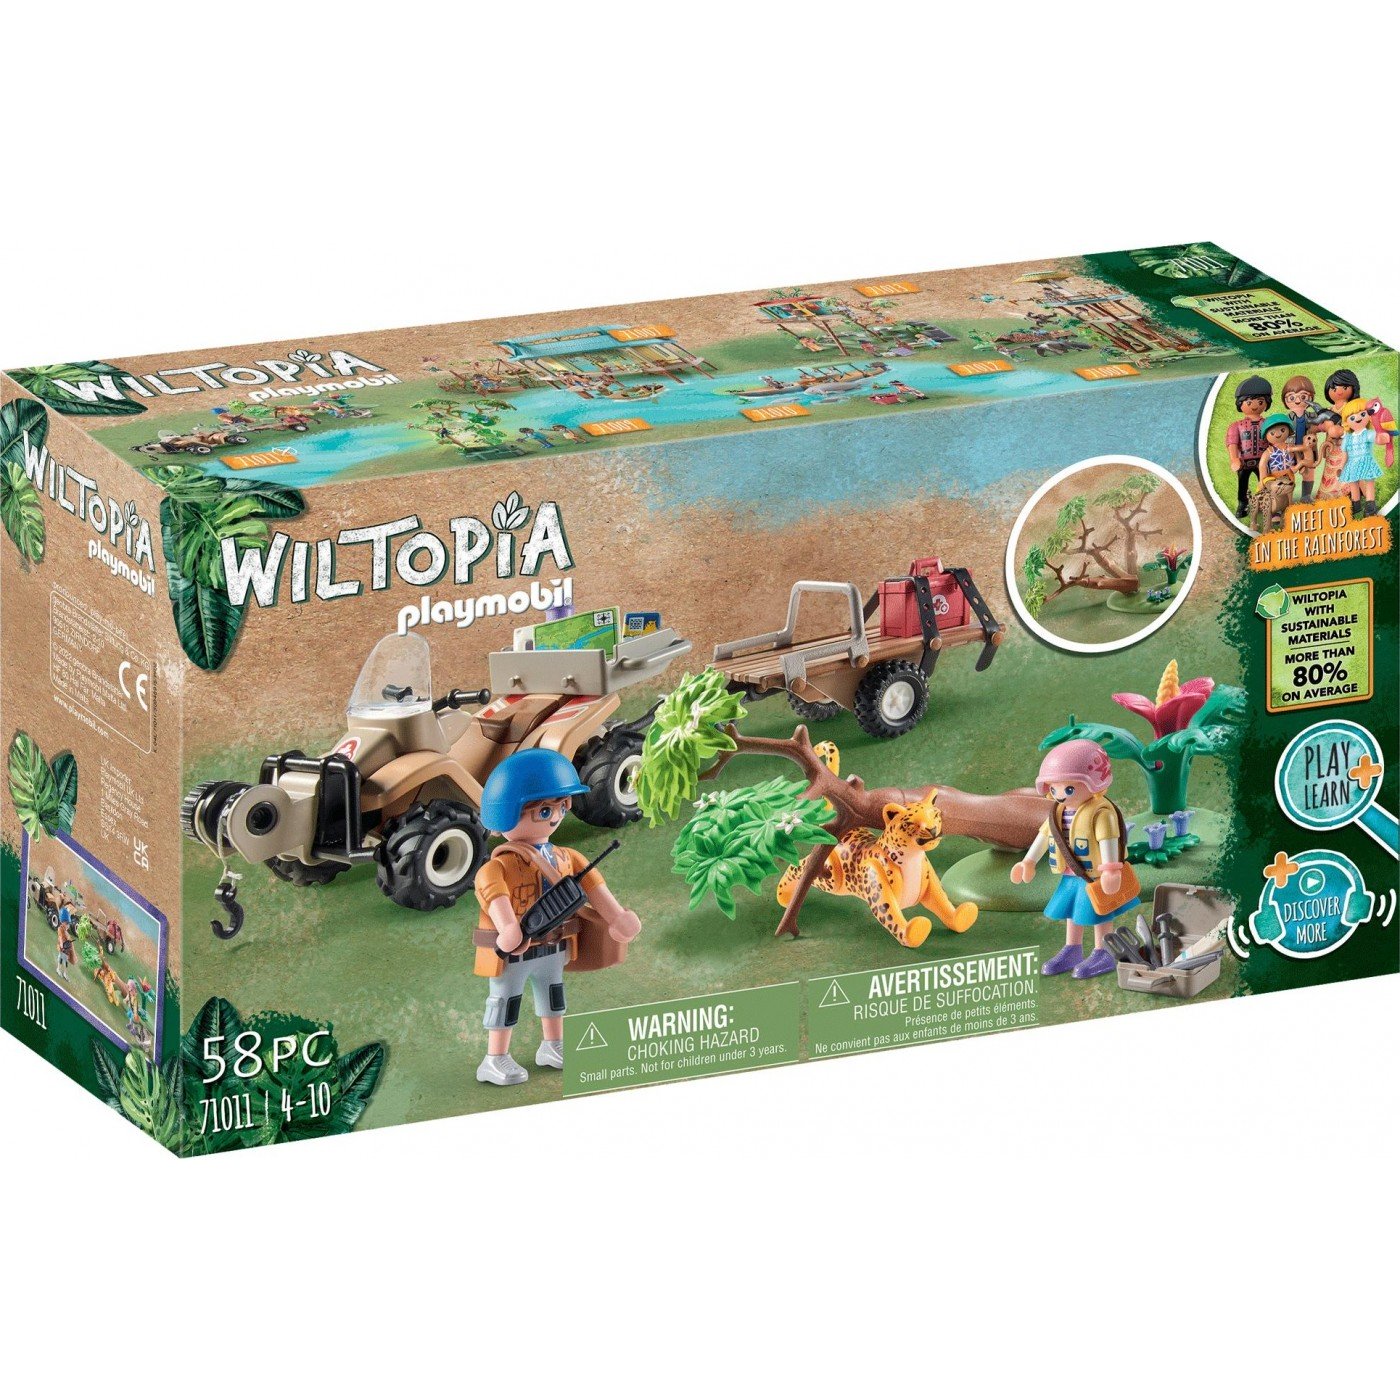 Playmobil Wiltopia - Φροντιστές Ζώων Με Εξερευνητικό Όχημα (71011)